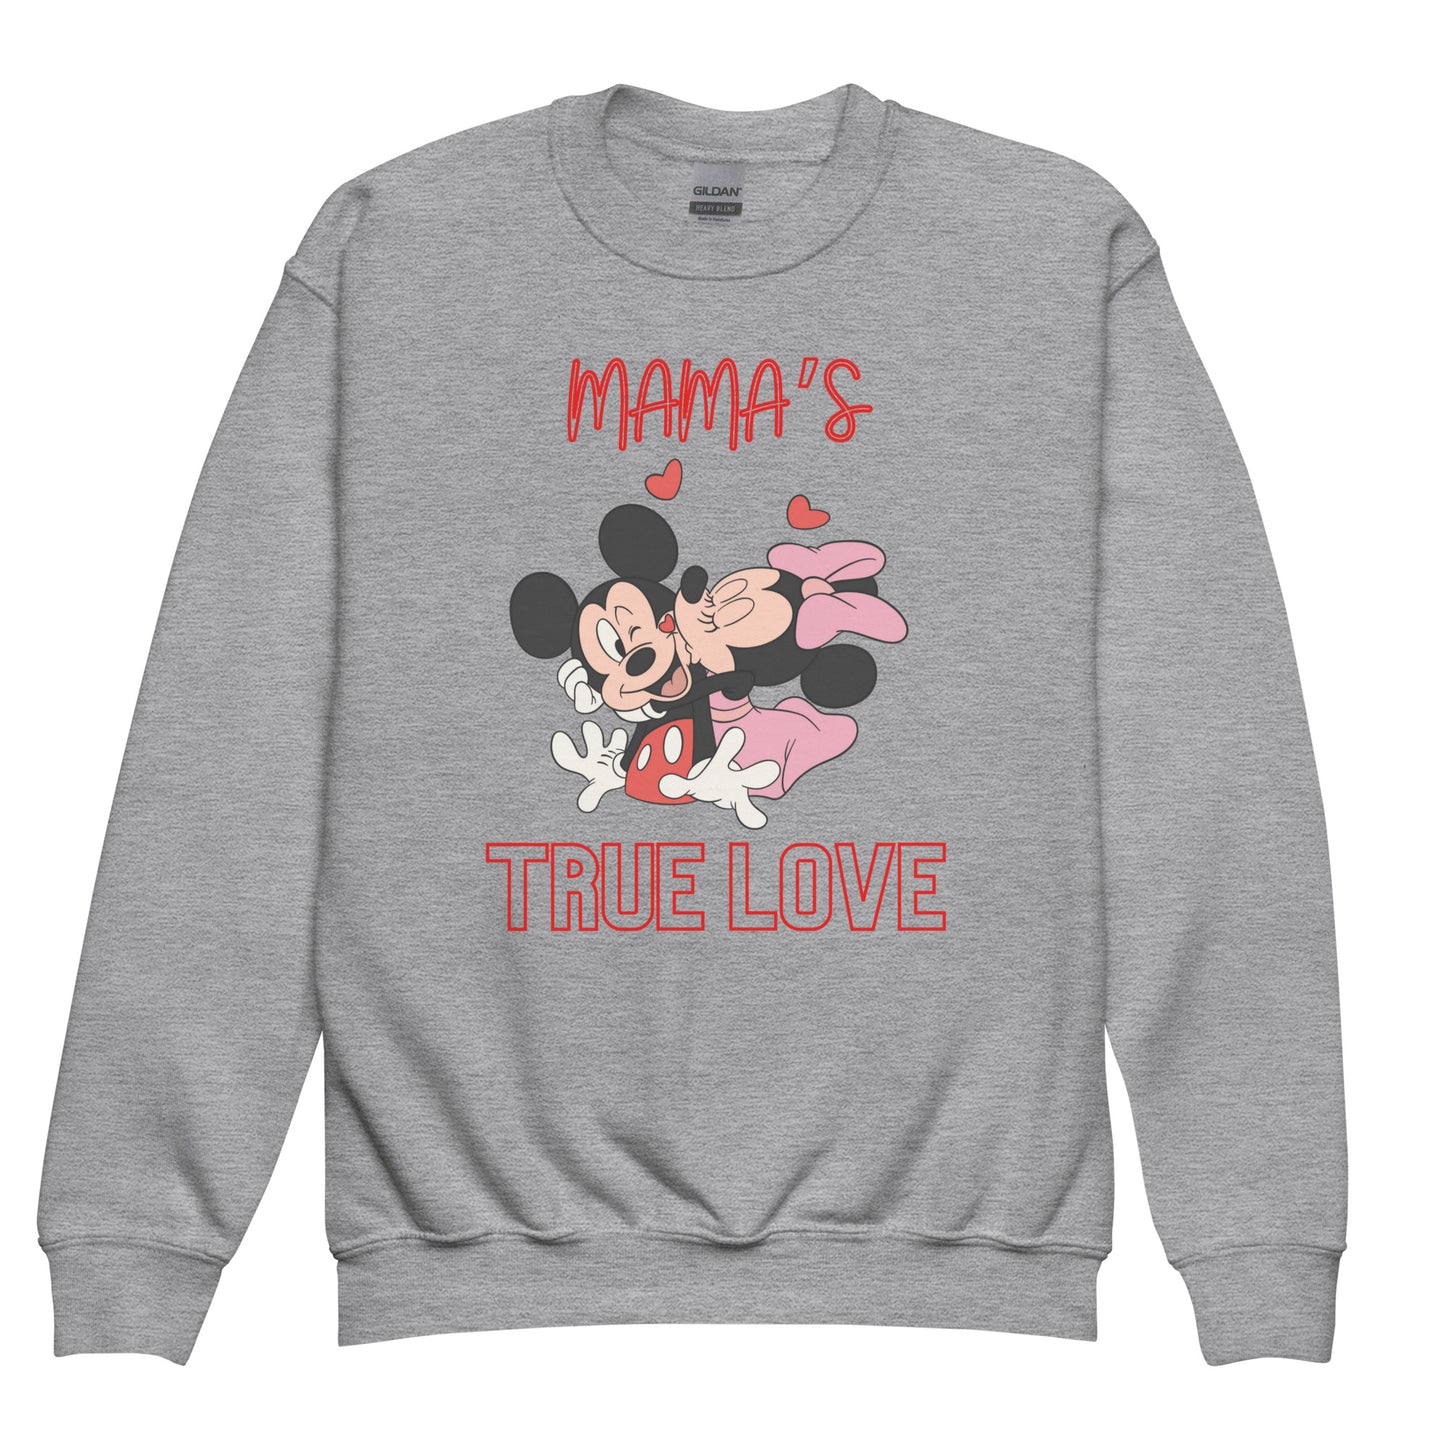 Mamas True Love Youth crewneck sweatshirt